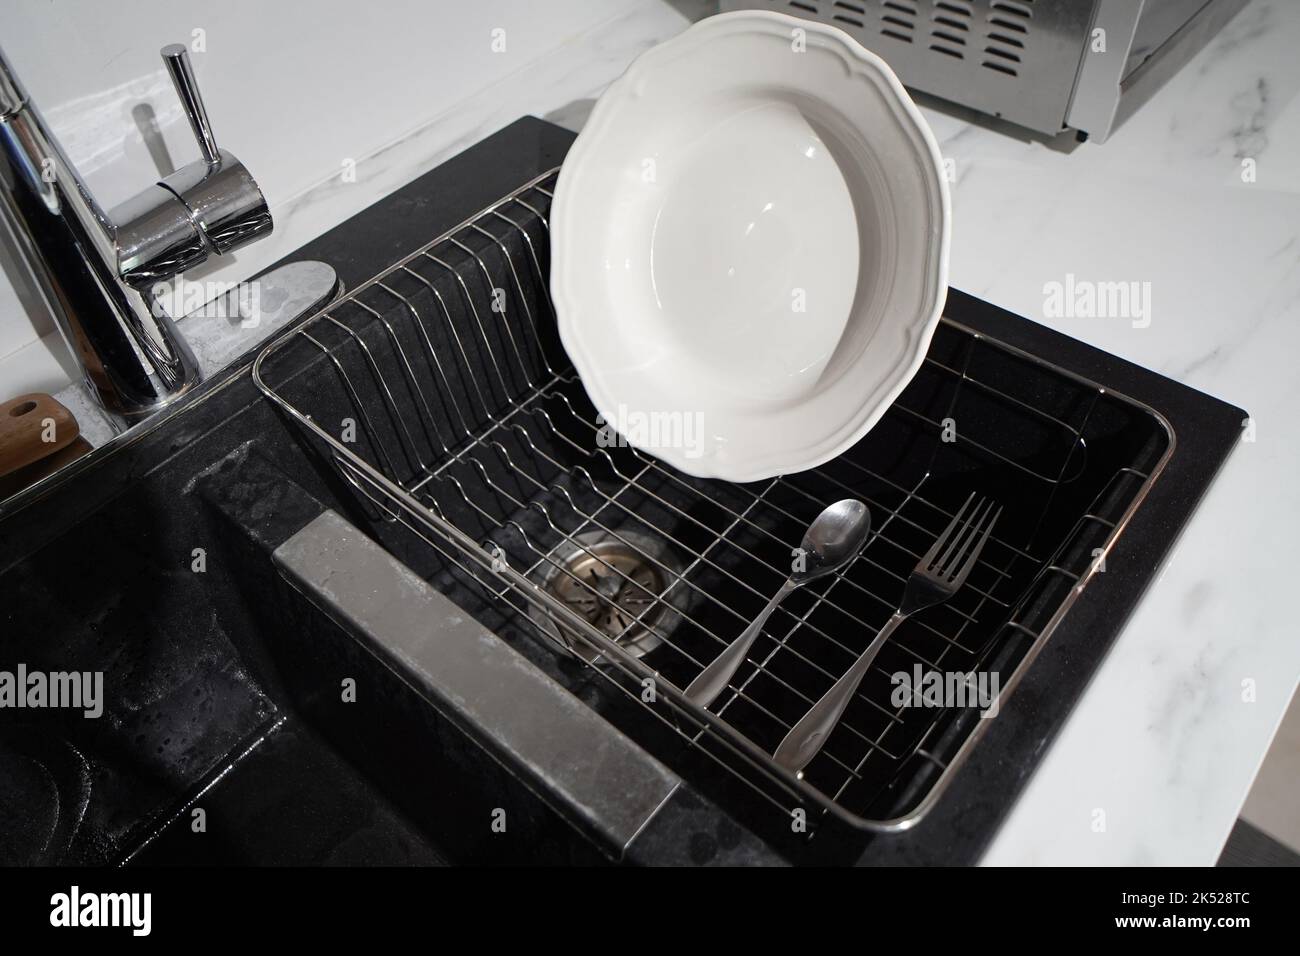 https://c8.alamy.com/comp/2K528TC/a-plate-drying-on-a-dish-rack-above-kitchen-sink-2K528TC.jpg